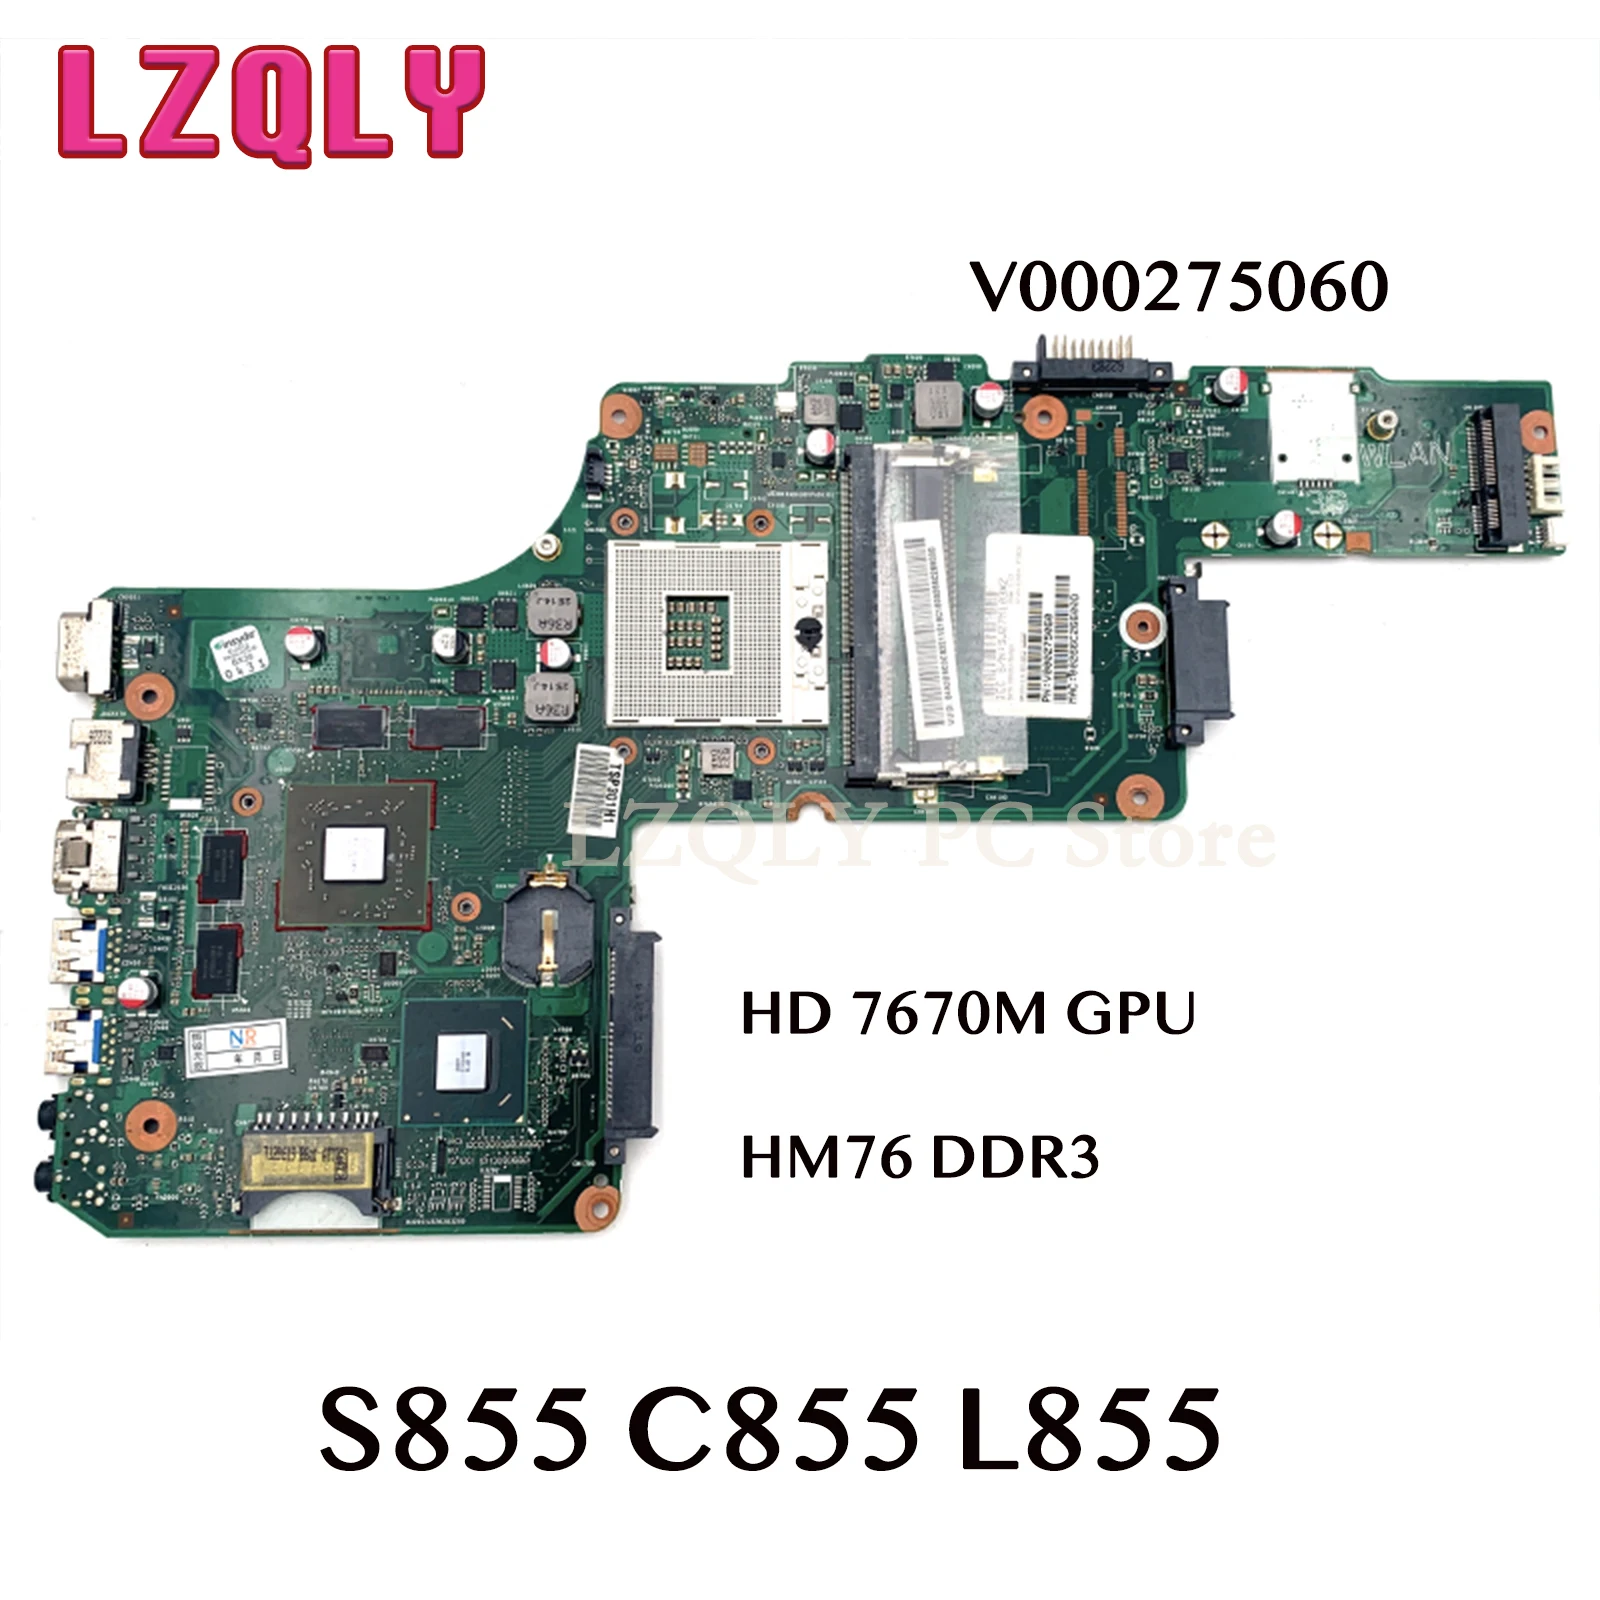 

LZQLY For TOSHIBA Satellite S855 C855 L855 V000275060 DK10FG-6050A2491301-MB-A03 Laptop Motherboard HD7670M GPU HM76 DDR3